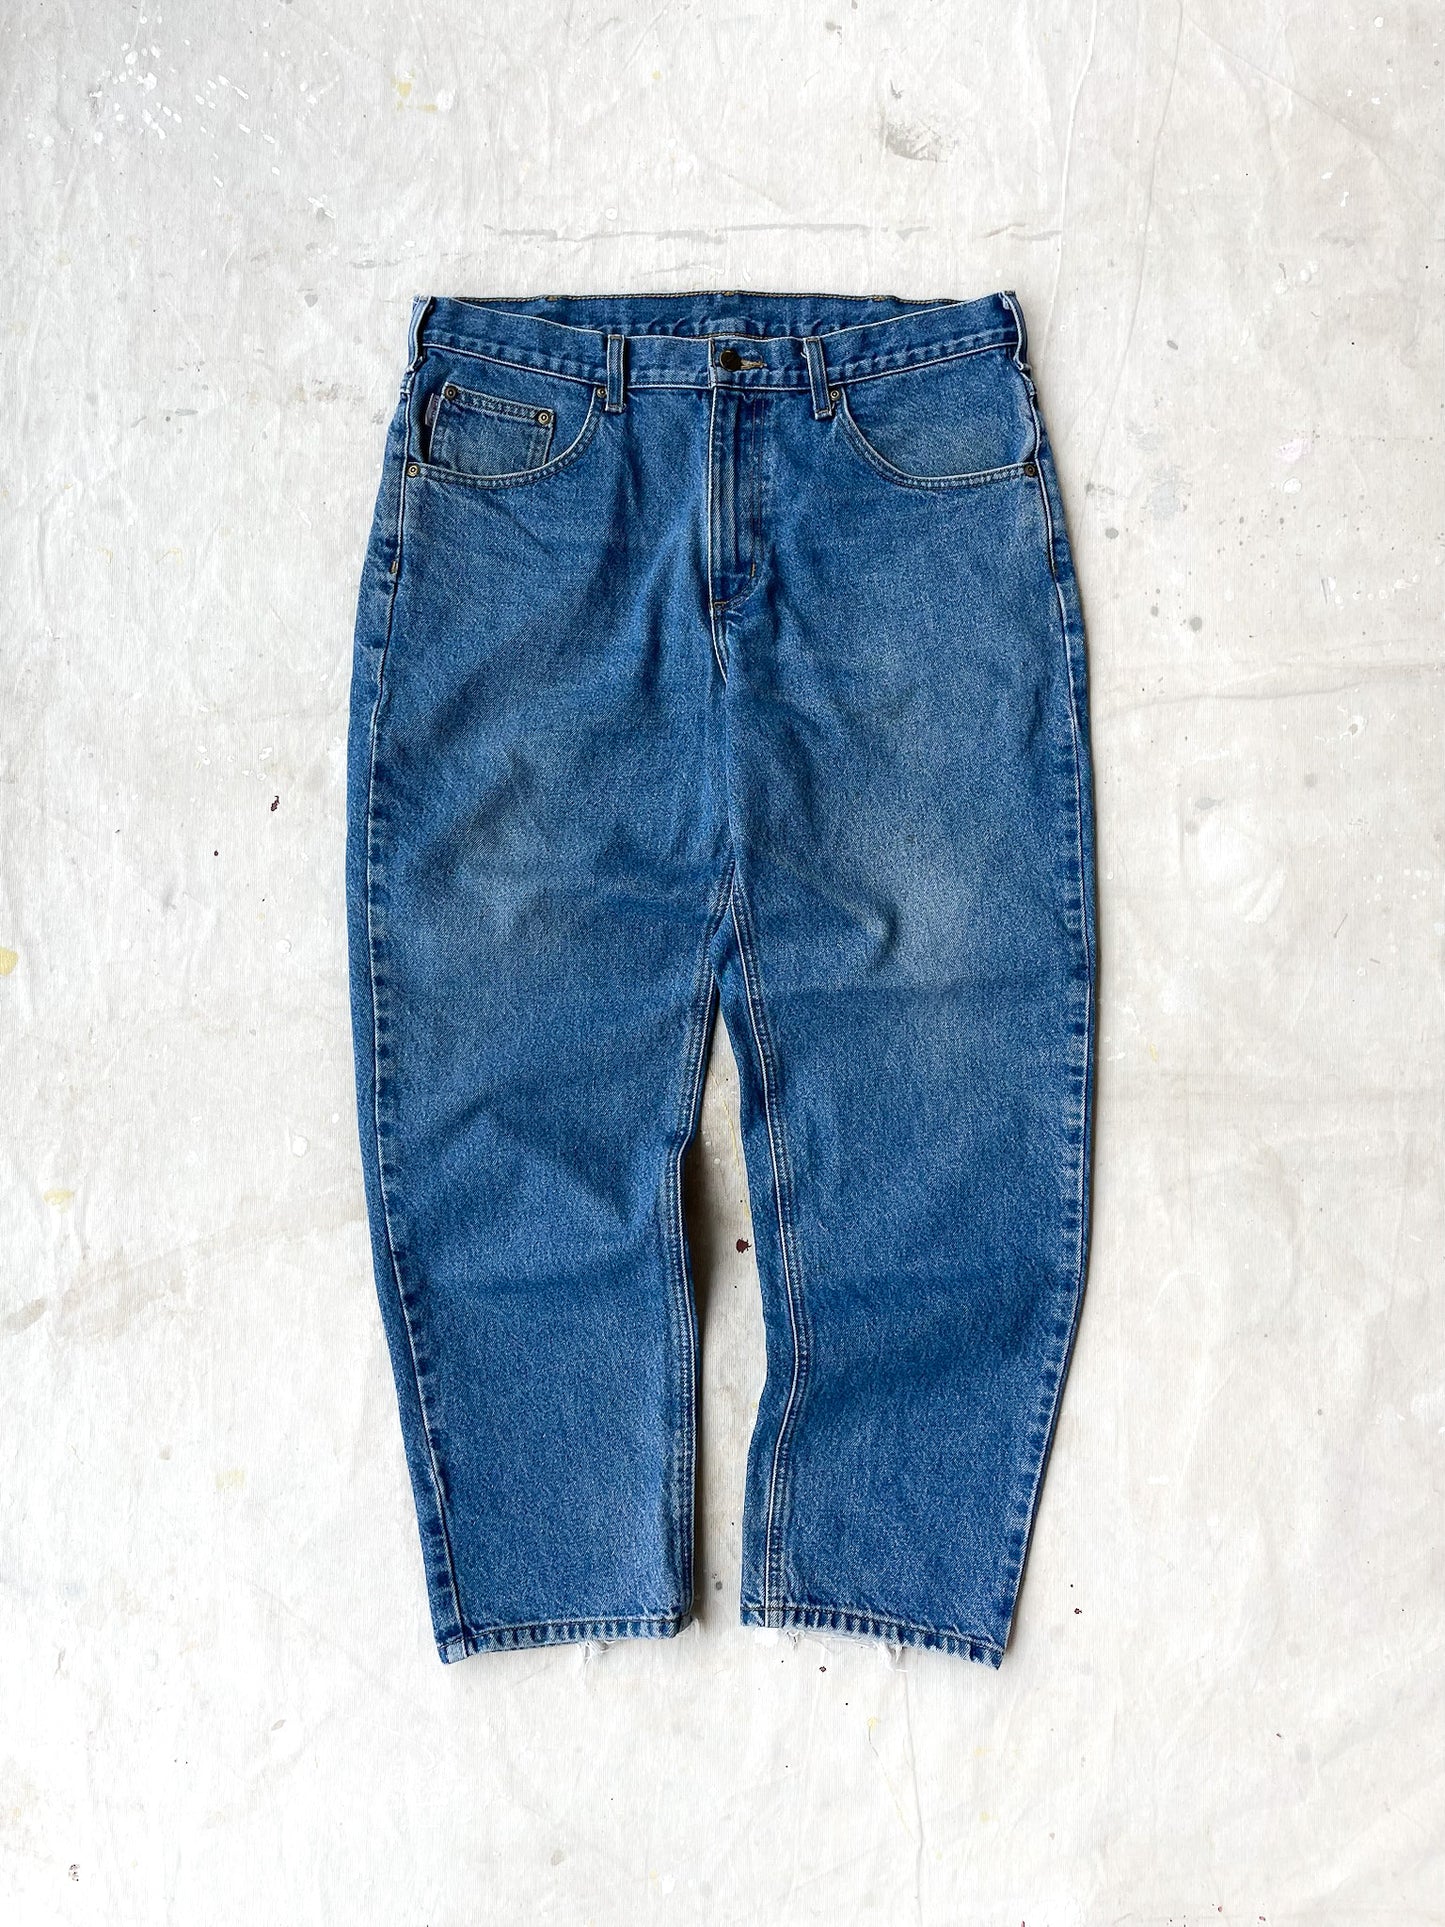 Carhartt Jeans—[36x30]